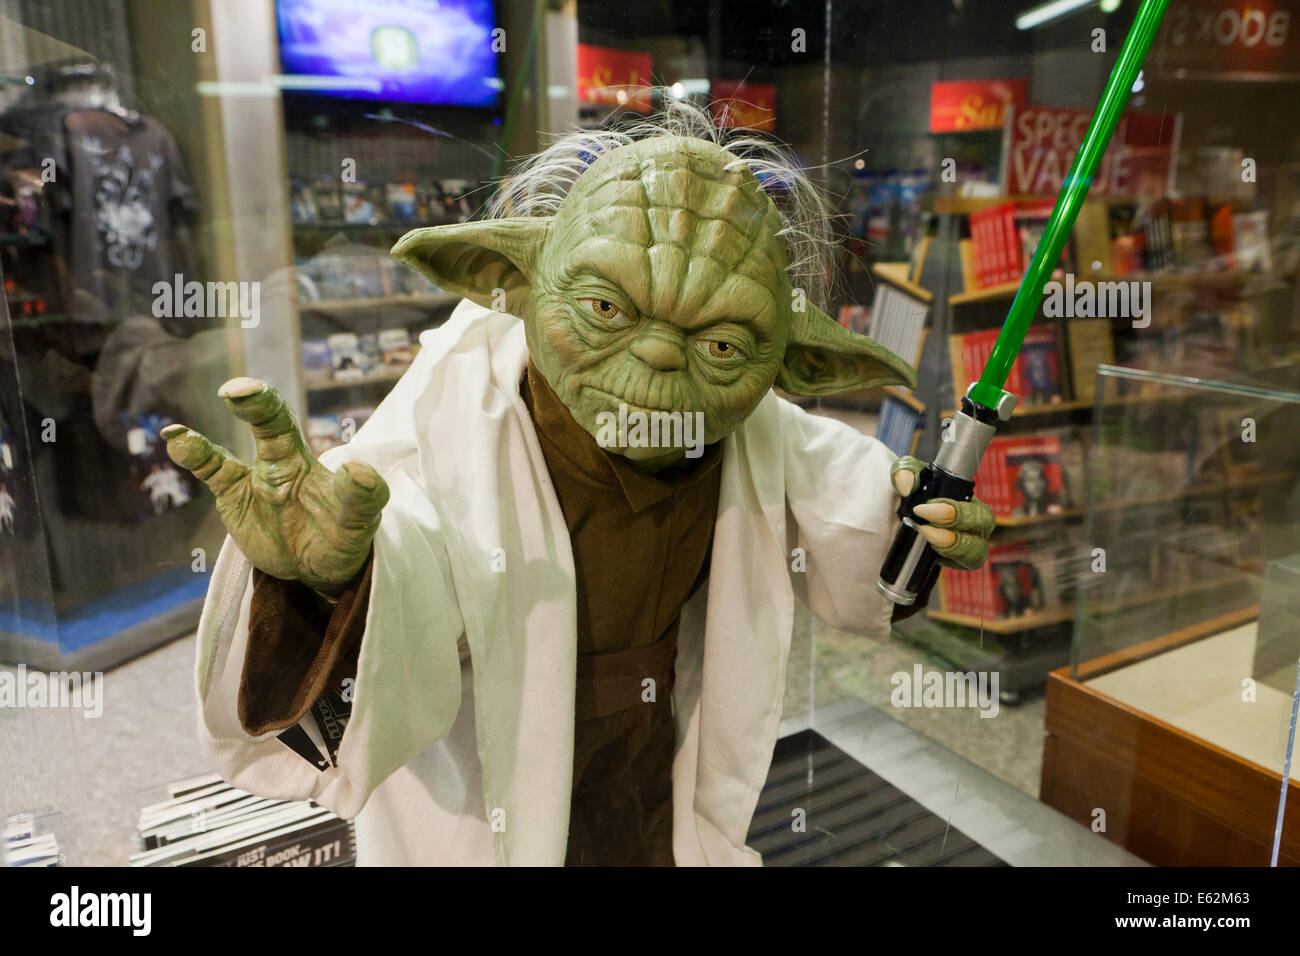 Yoda doll at toy store - USA Stock Photo